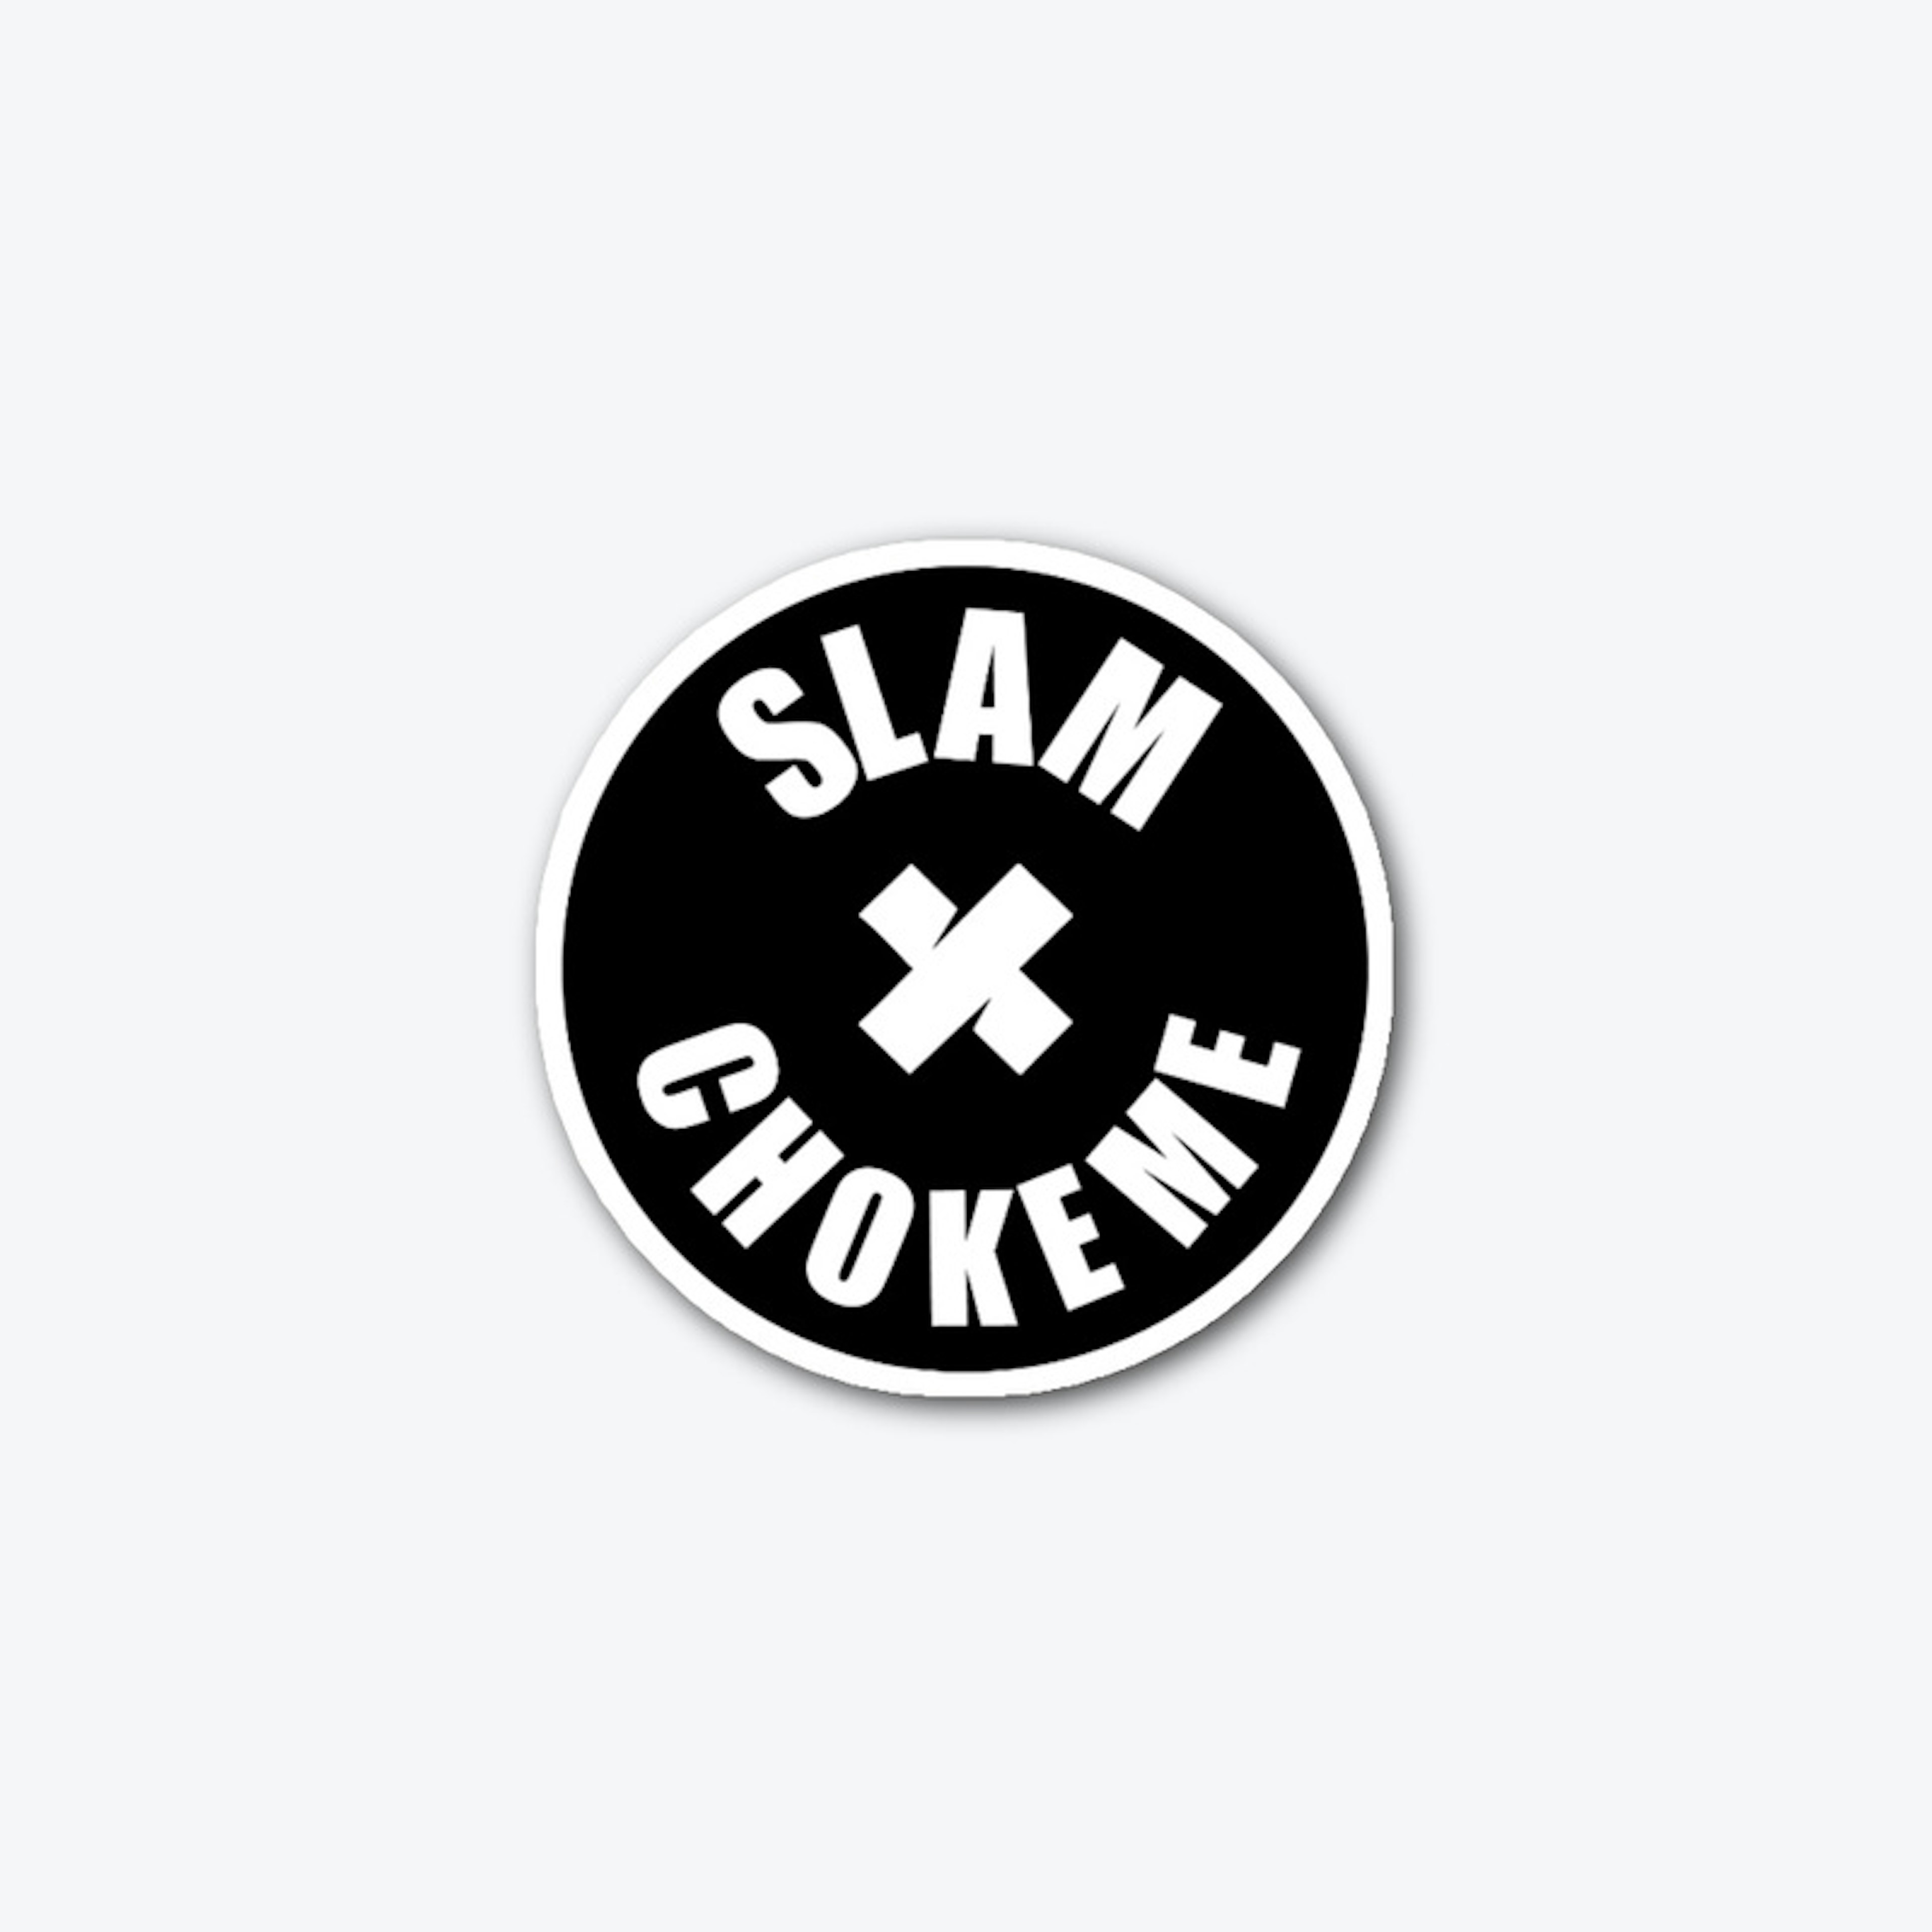 Slam and ChokeMe